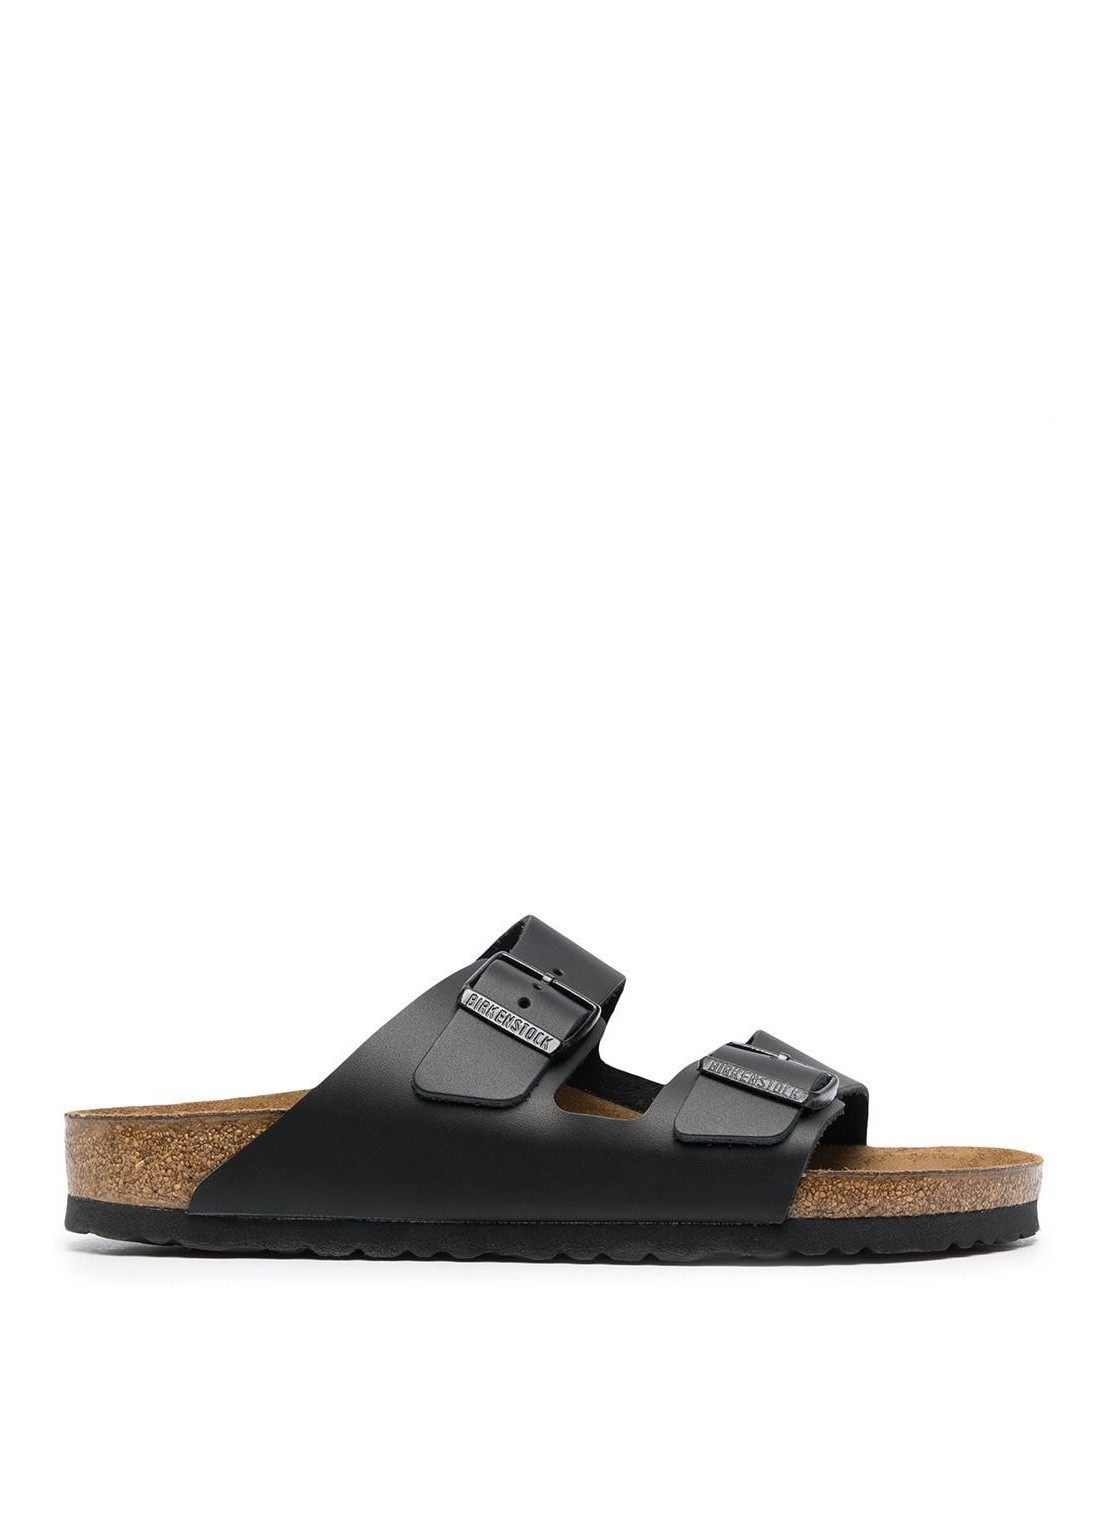 Sandalia birkenstock sandal man arizona nl 51193 black talla negro
 